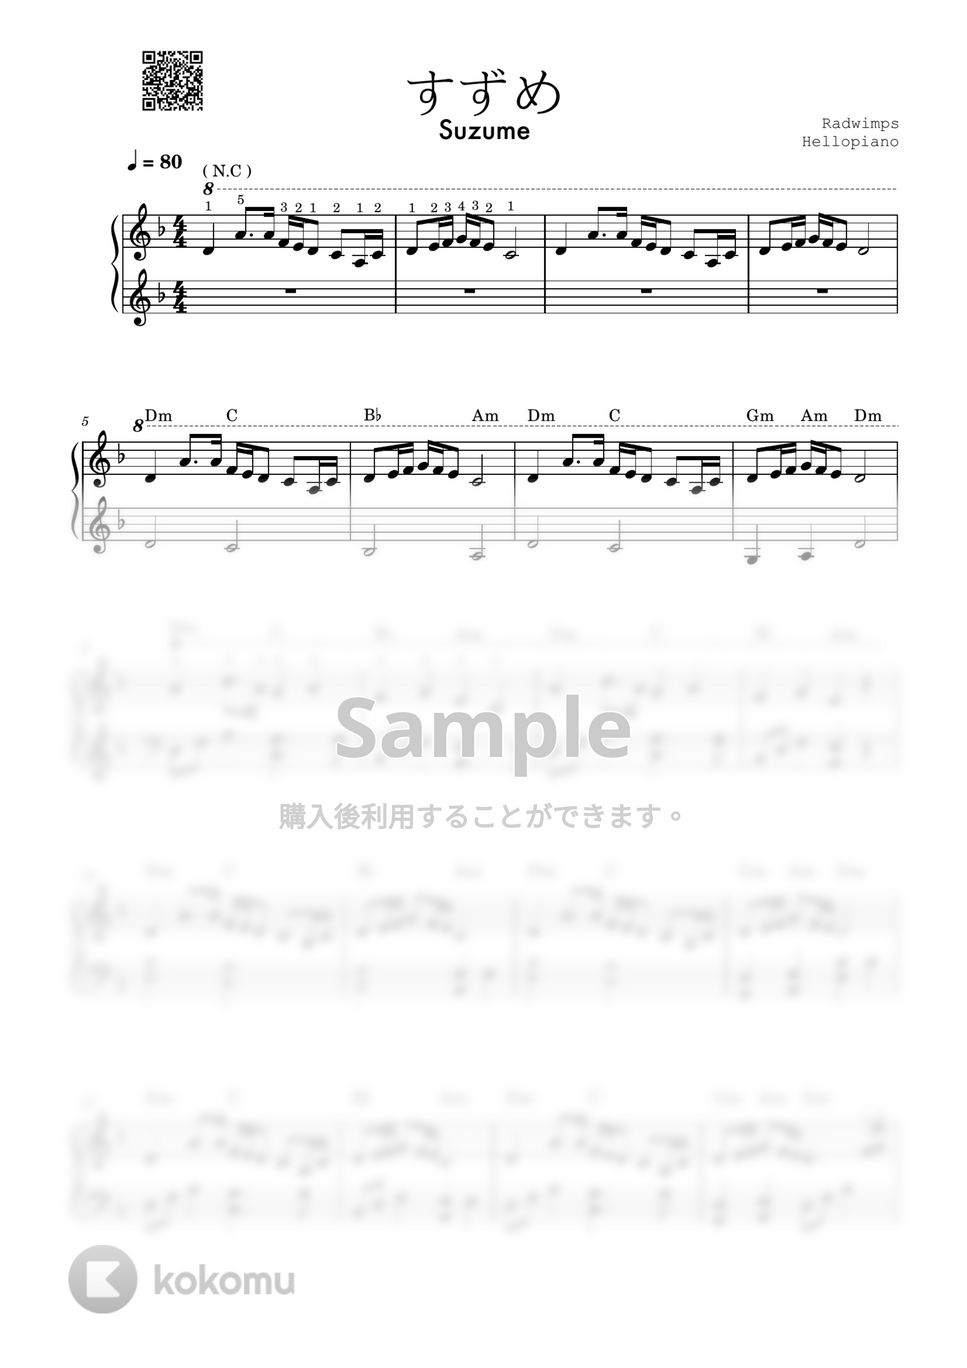 Radwimps - すずめ(suzume) (簡単 ver.) by Hellopiano